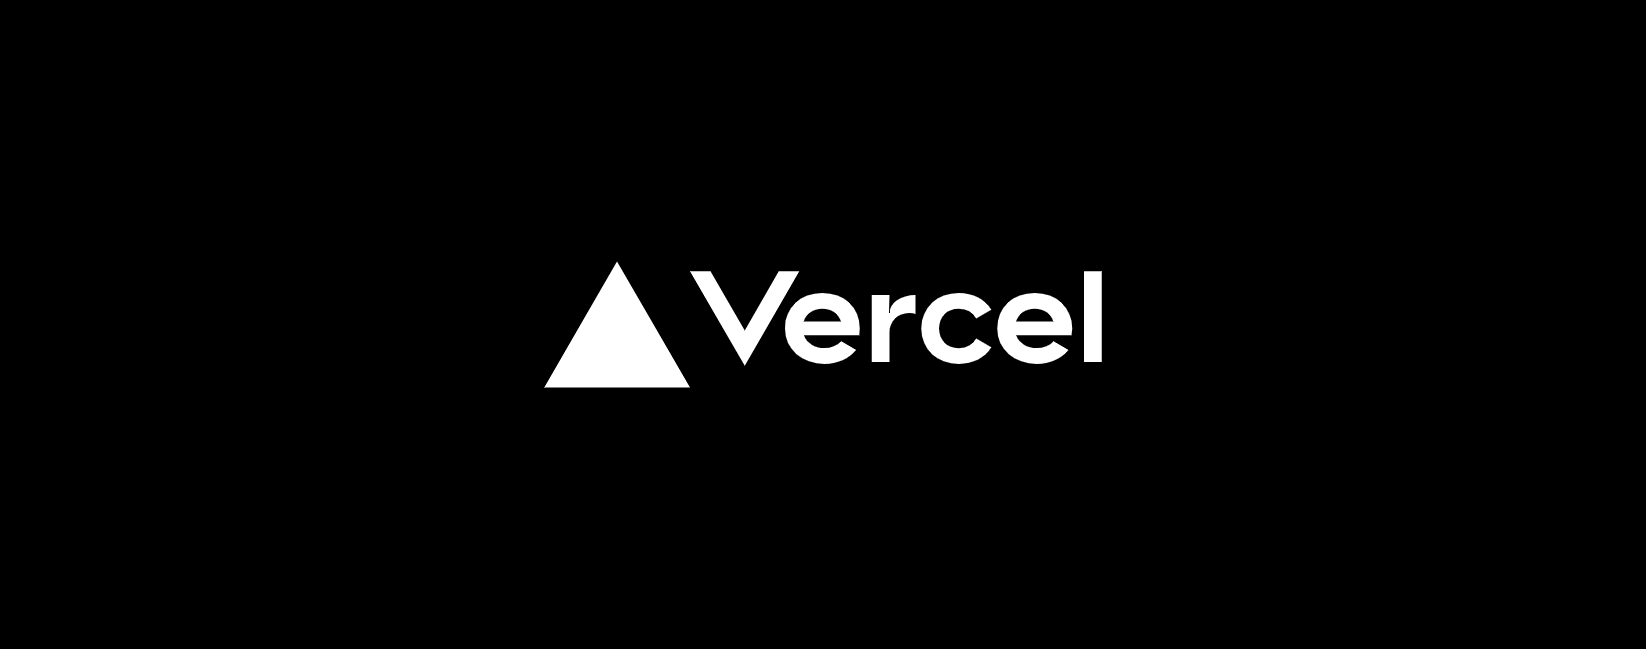 https://cloud-8k5ptmffz-hack-club-bot.vercel.app/0vercel-logo.png